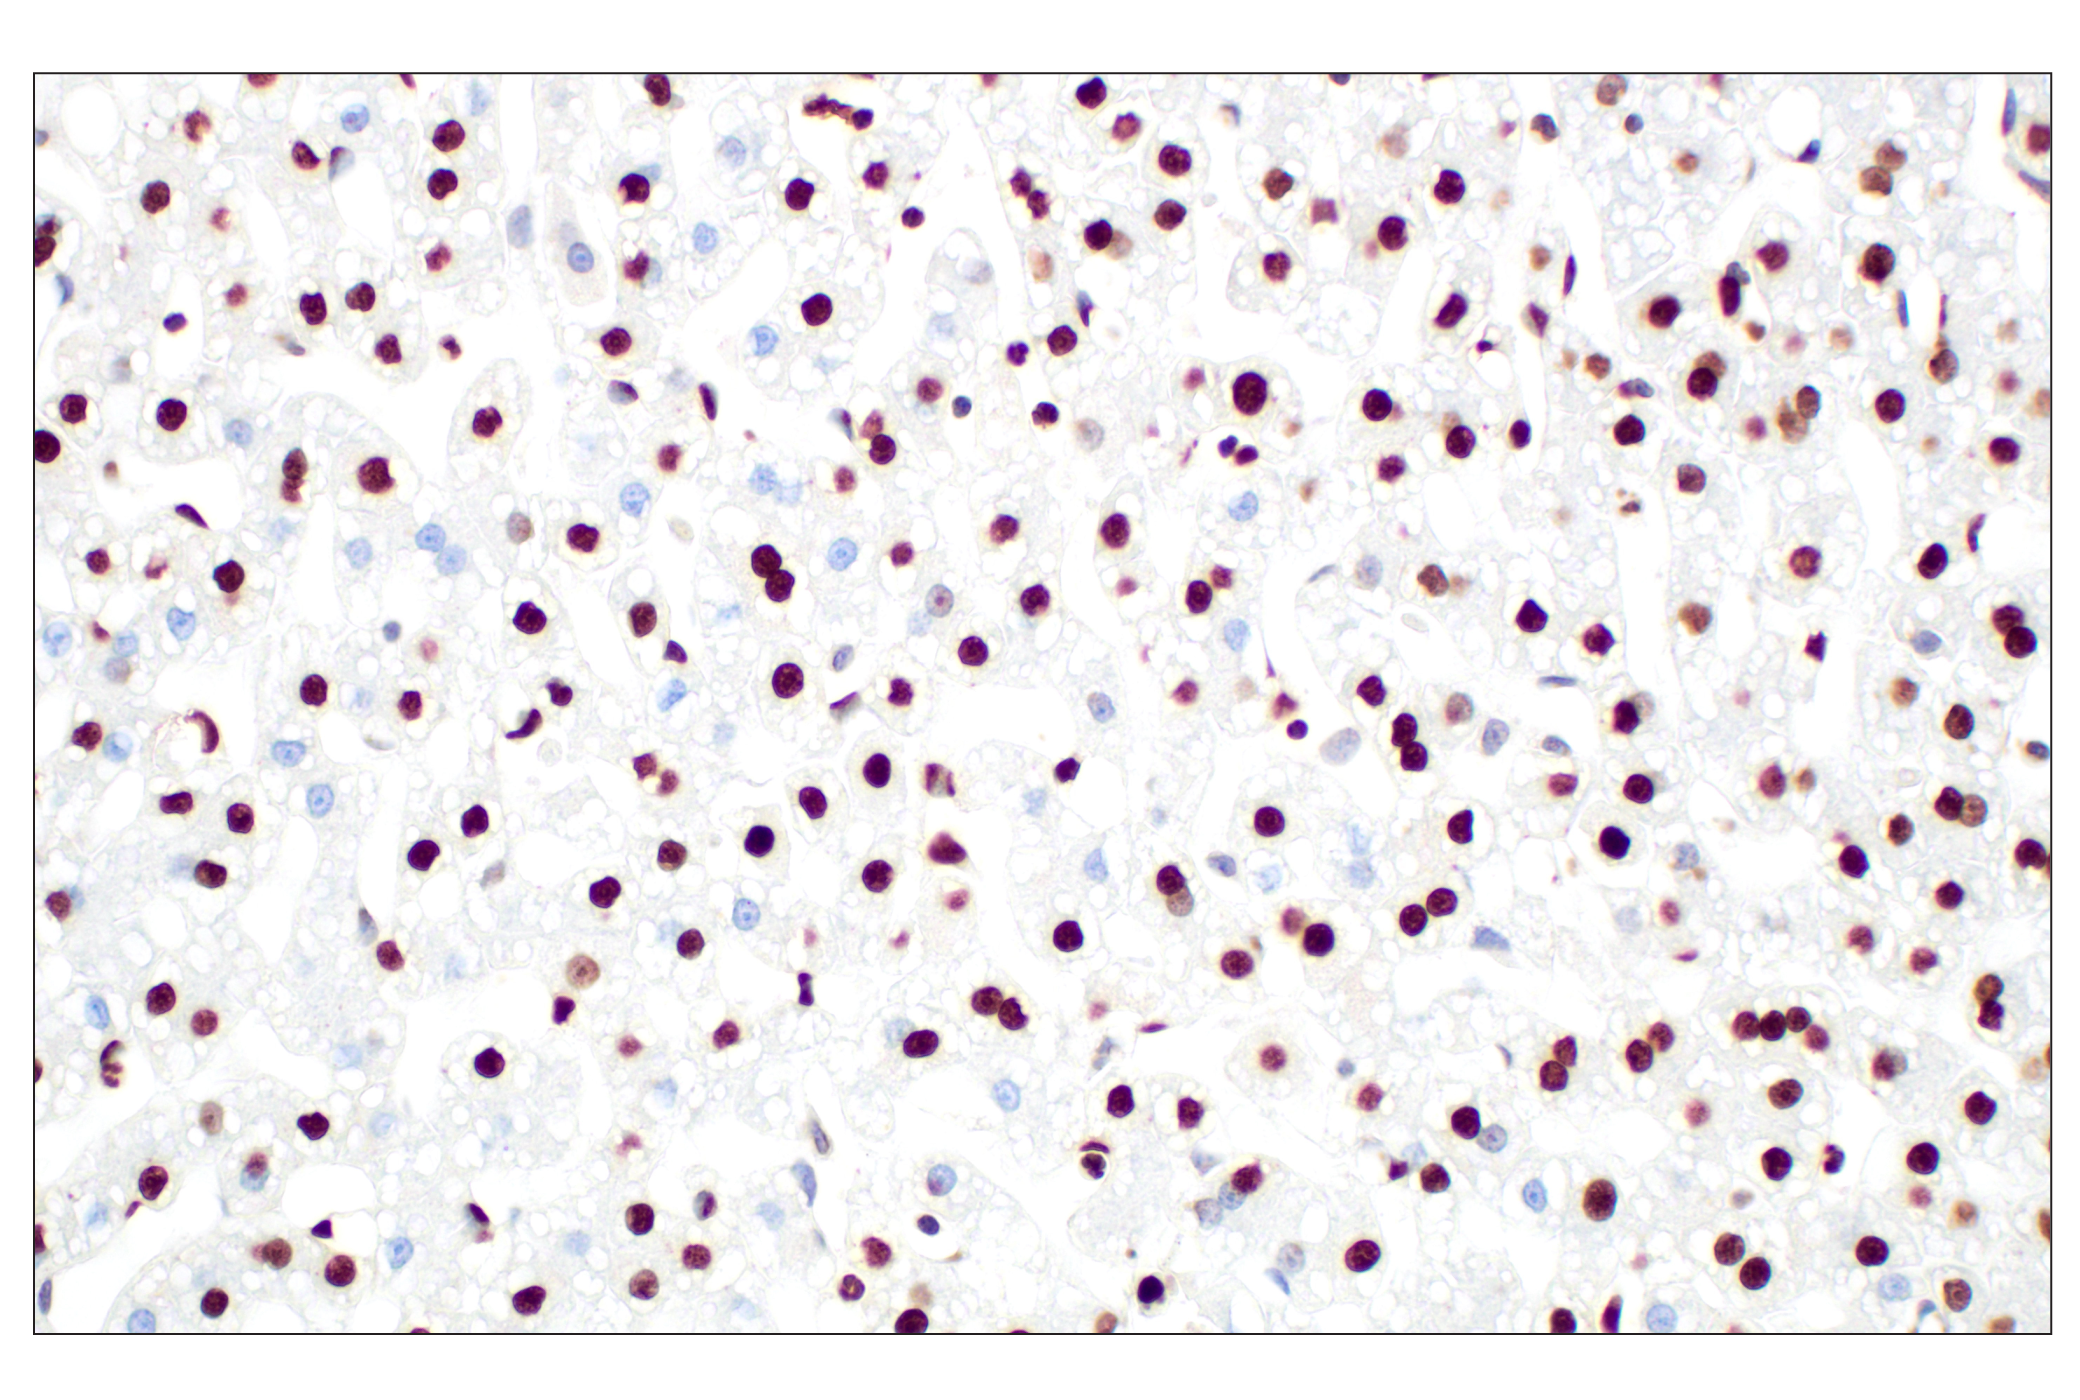  Image 33: Acetyl-Histone H3 Antibody Sampler Kit